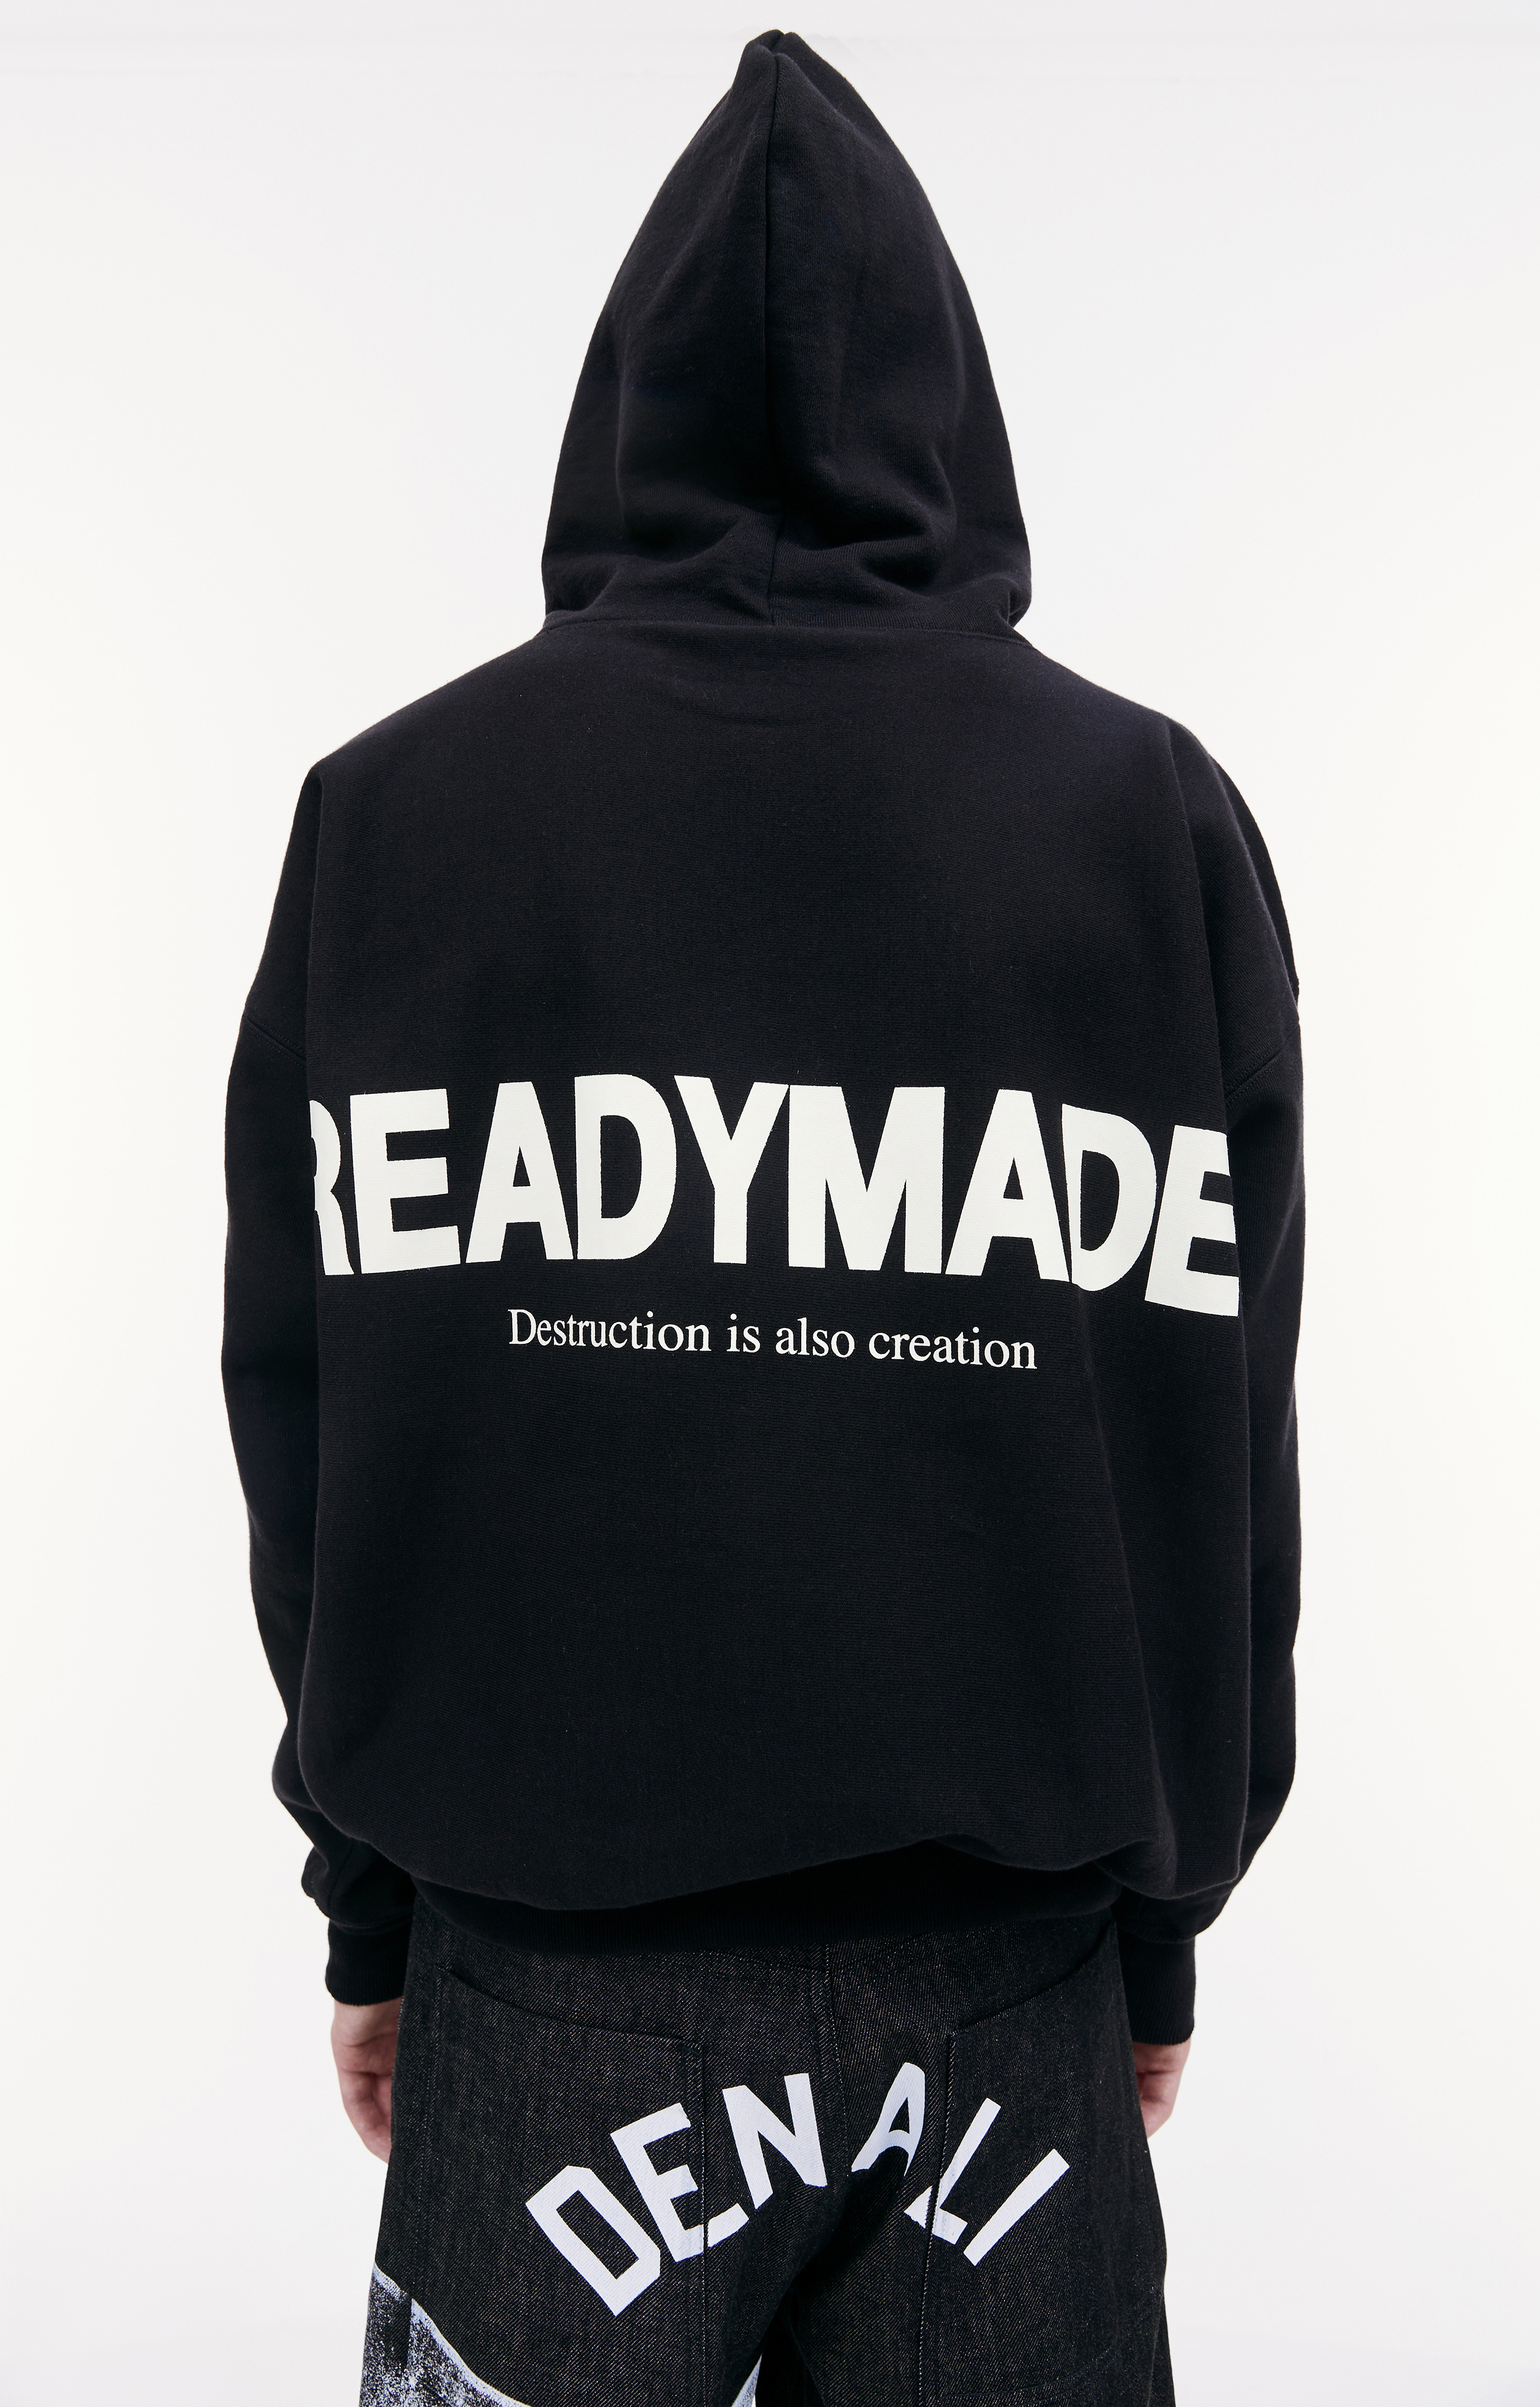 Buy Readymade men black smile logo hoodie for $609 online on SV77